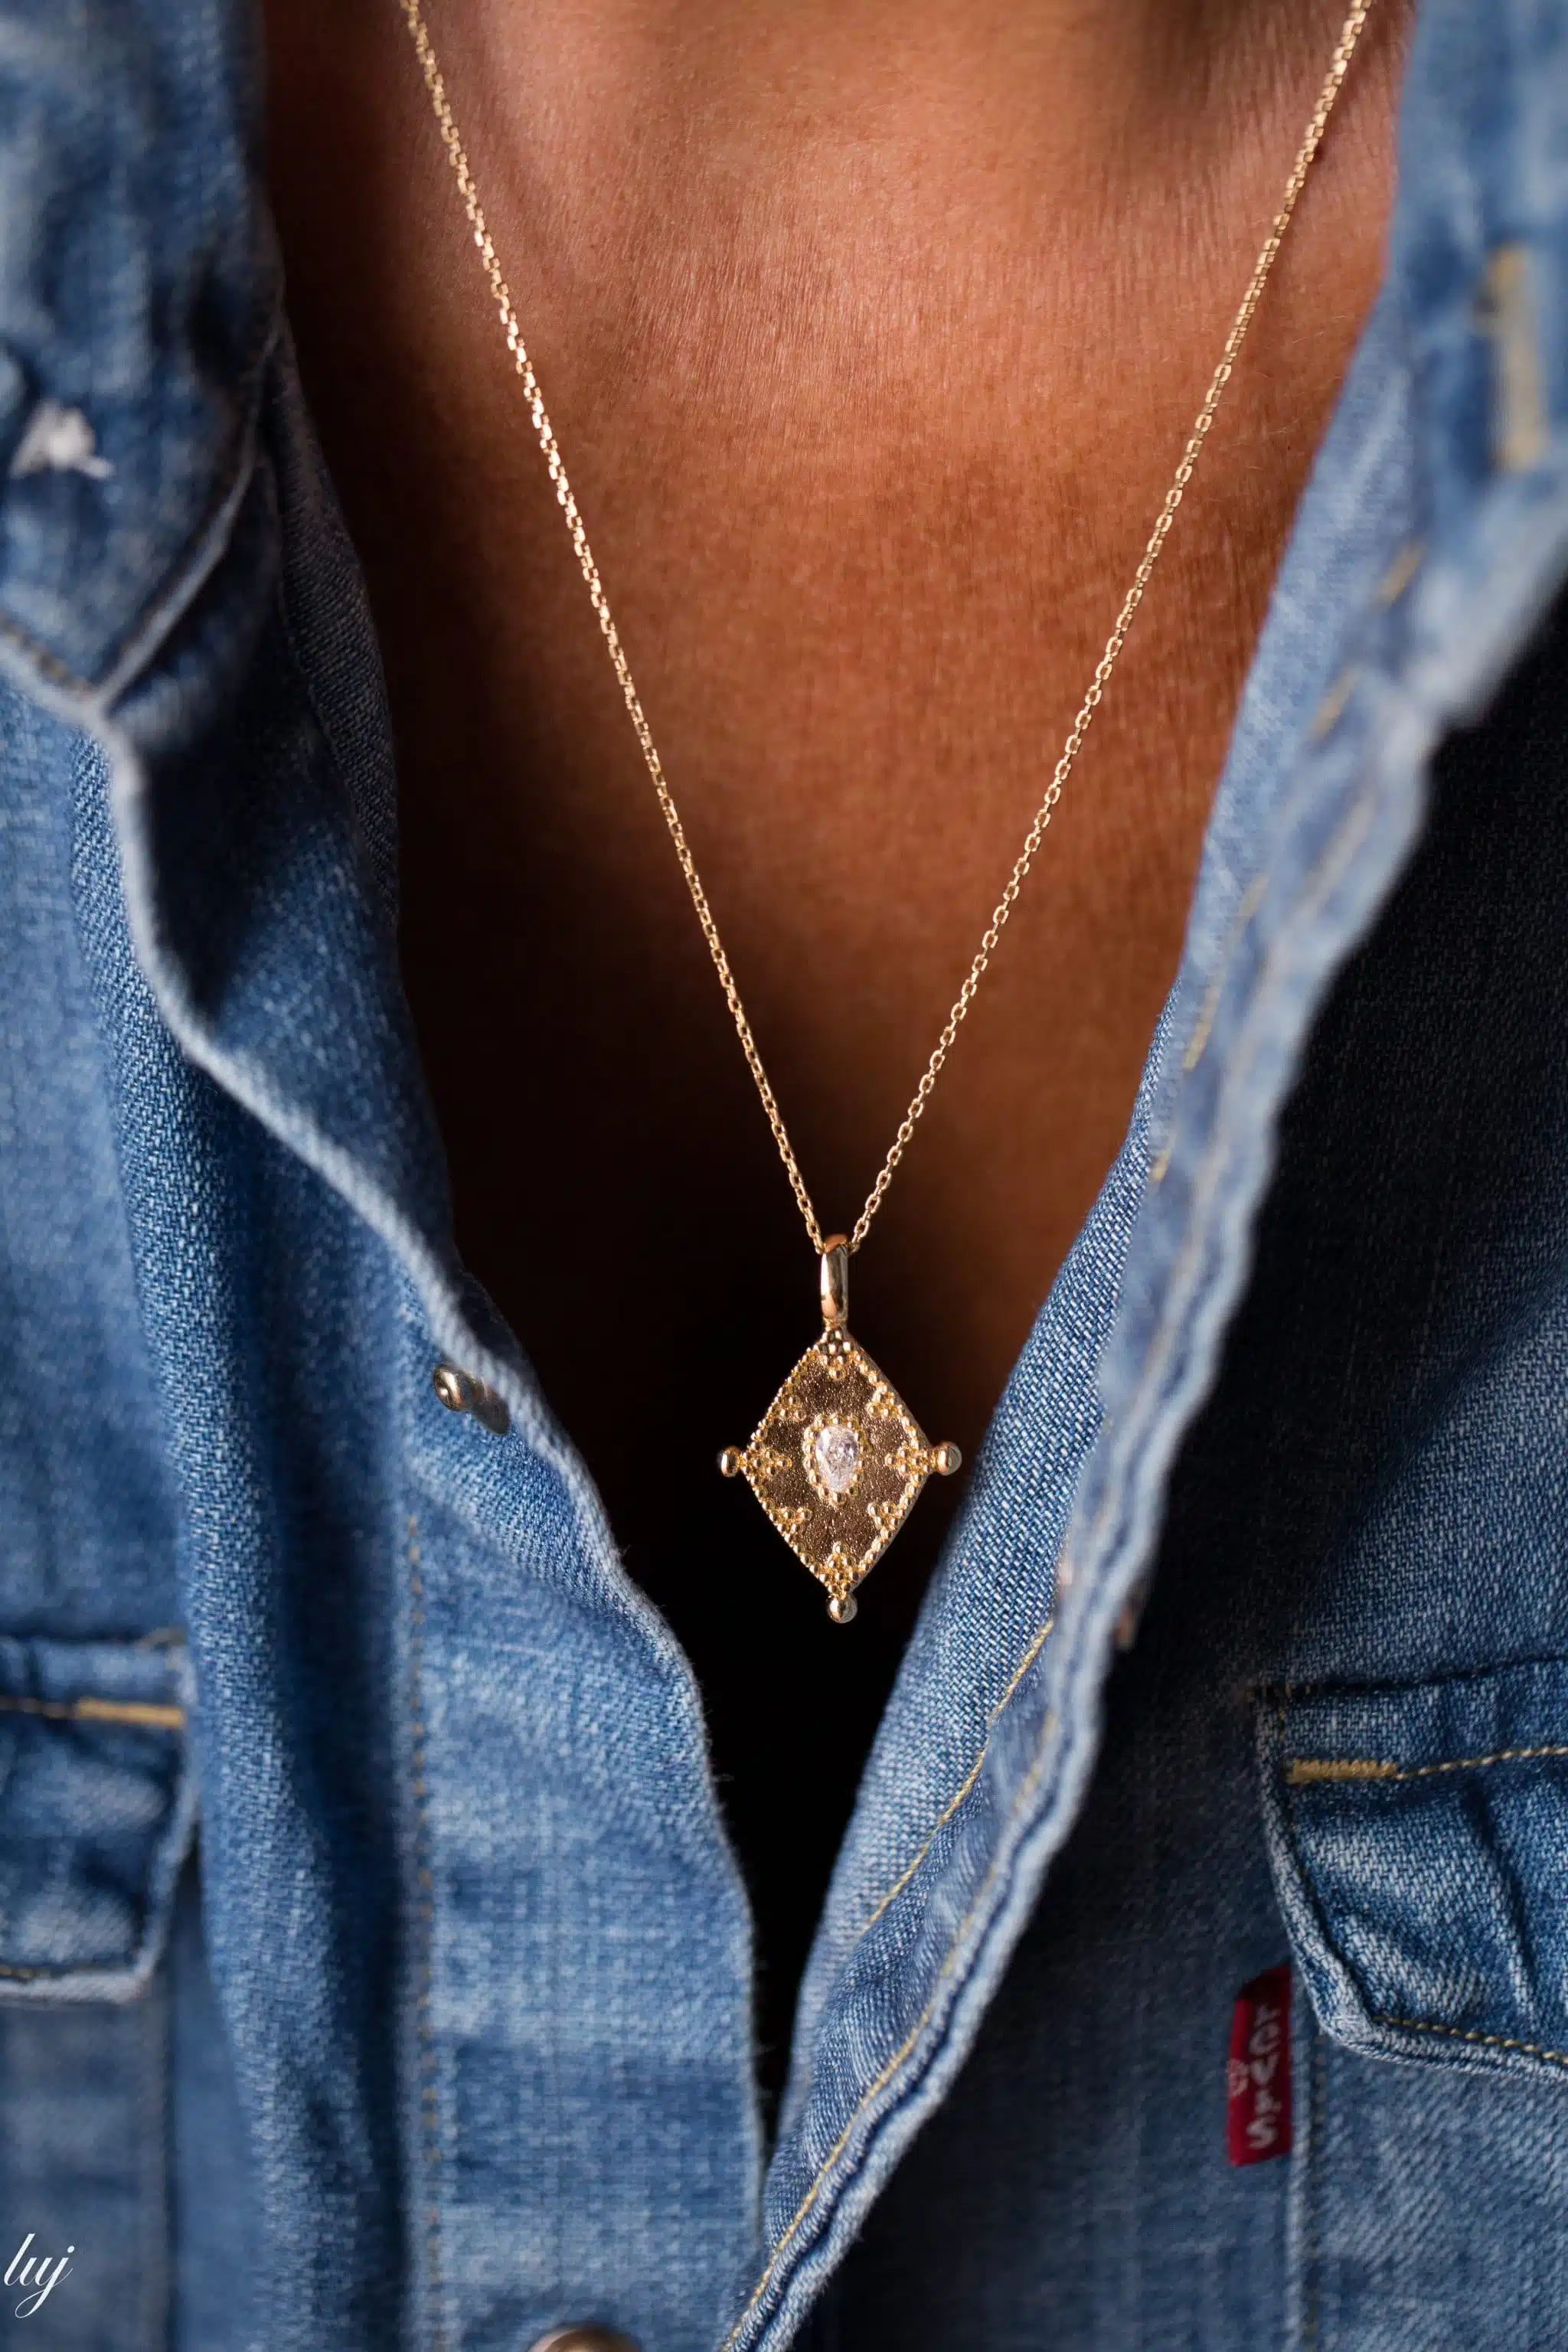 Mimi necklace with pendant - Luj Paris